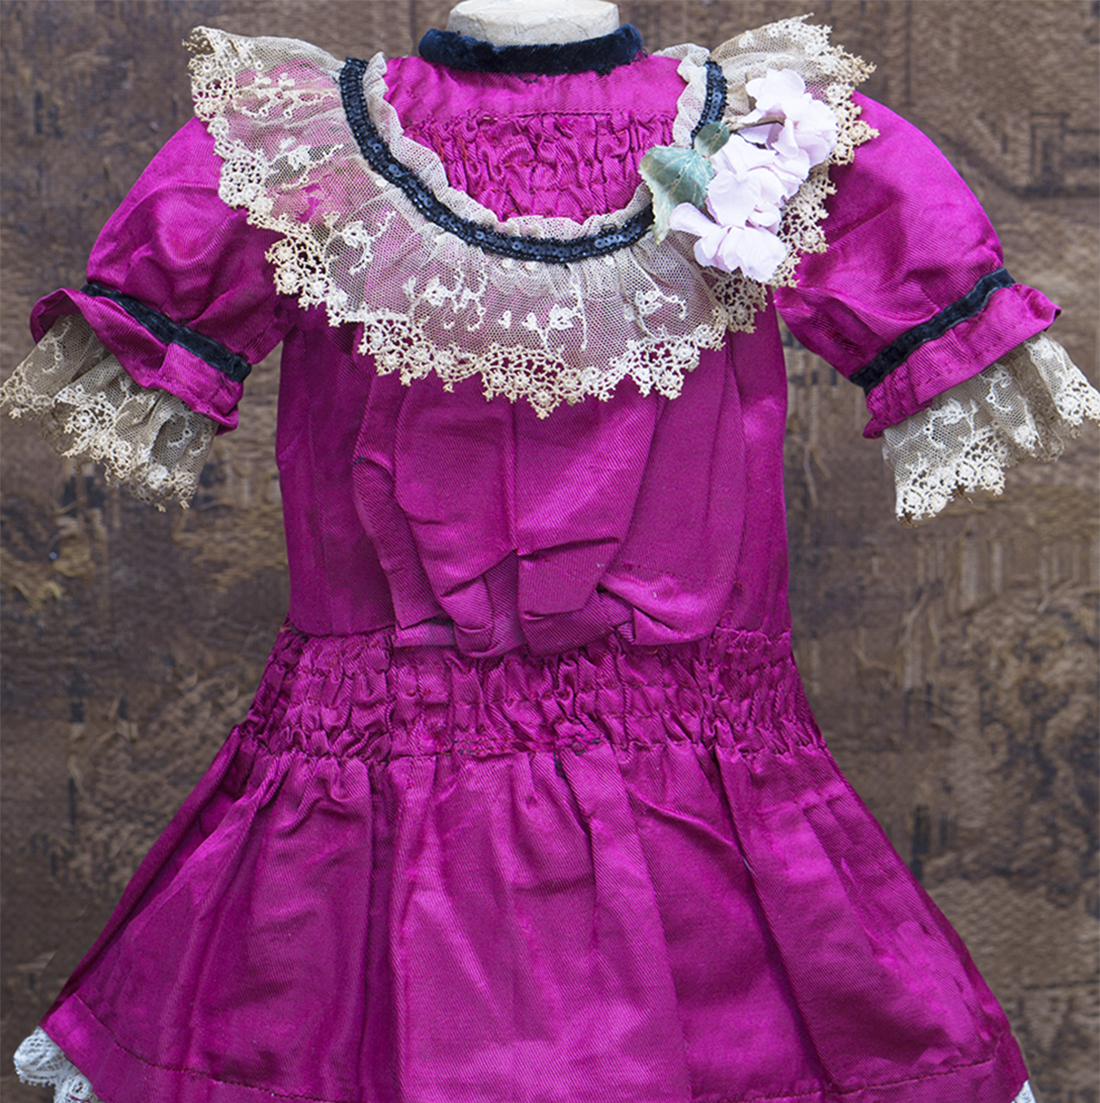 Antique Doll dress